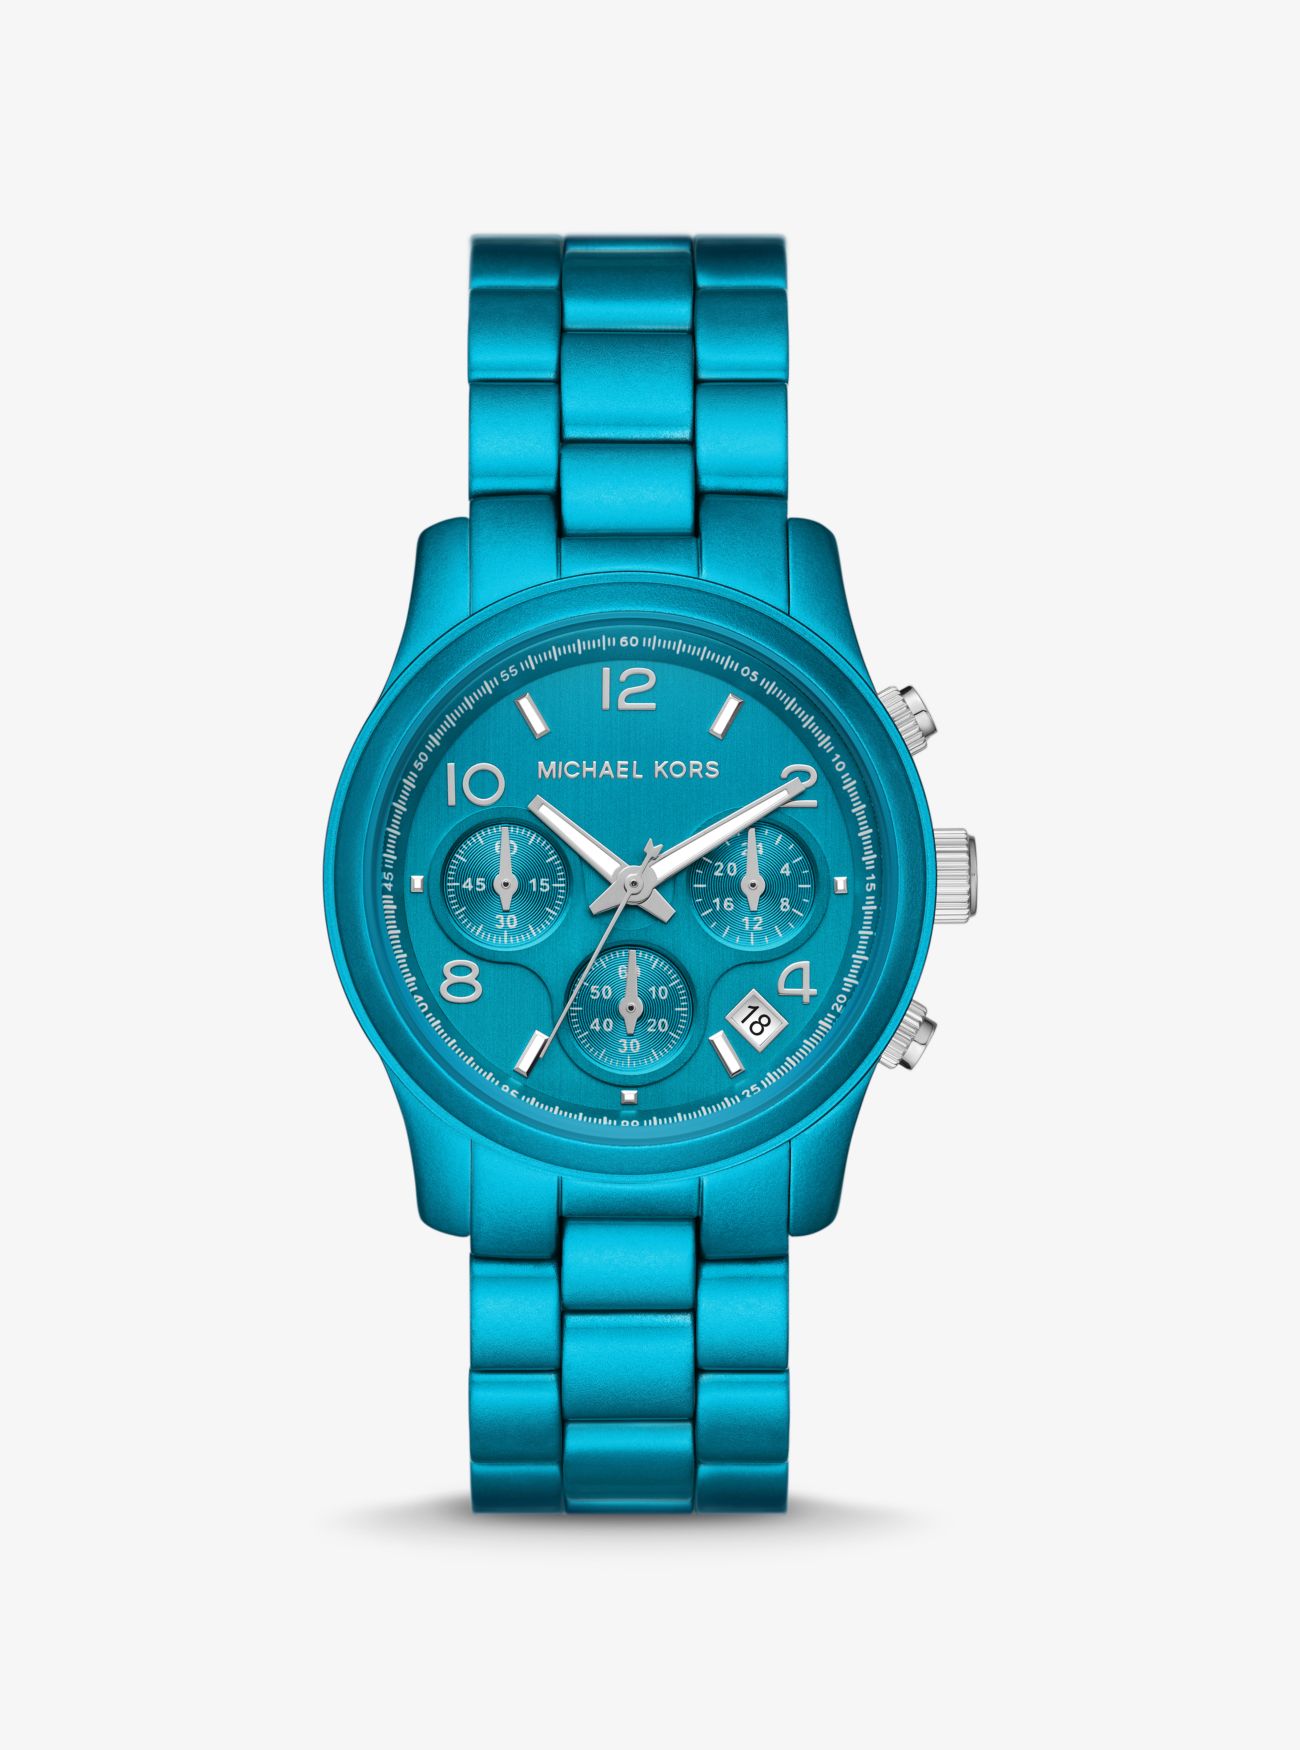 MK Limited-Edition Runway Blue-Tone Watch - Santorini Blue - Michael Kors